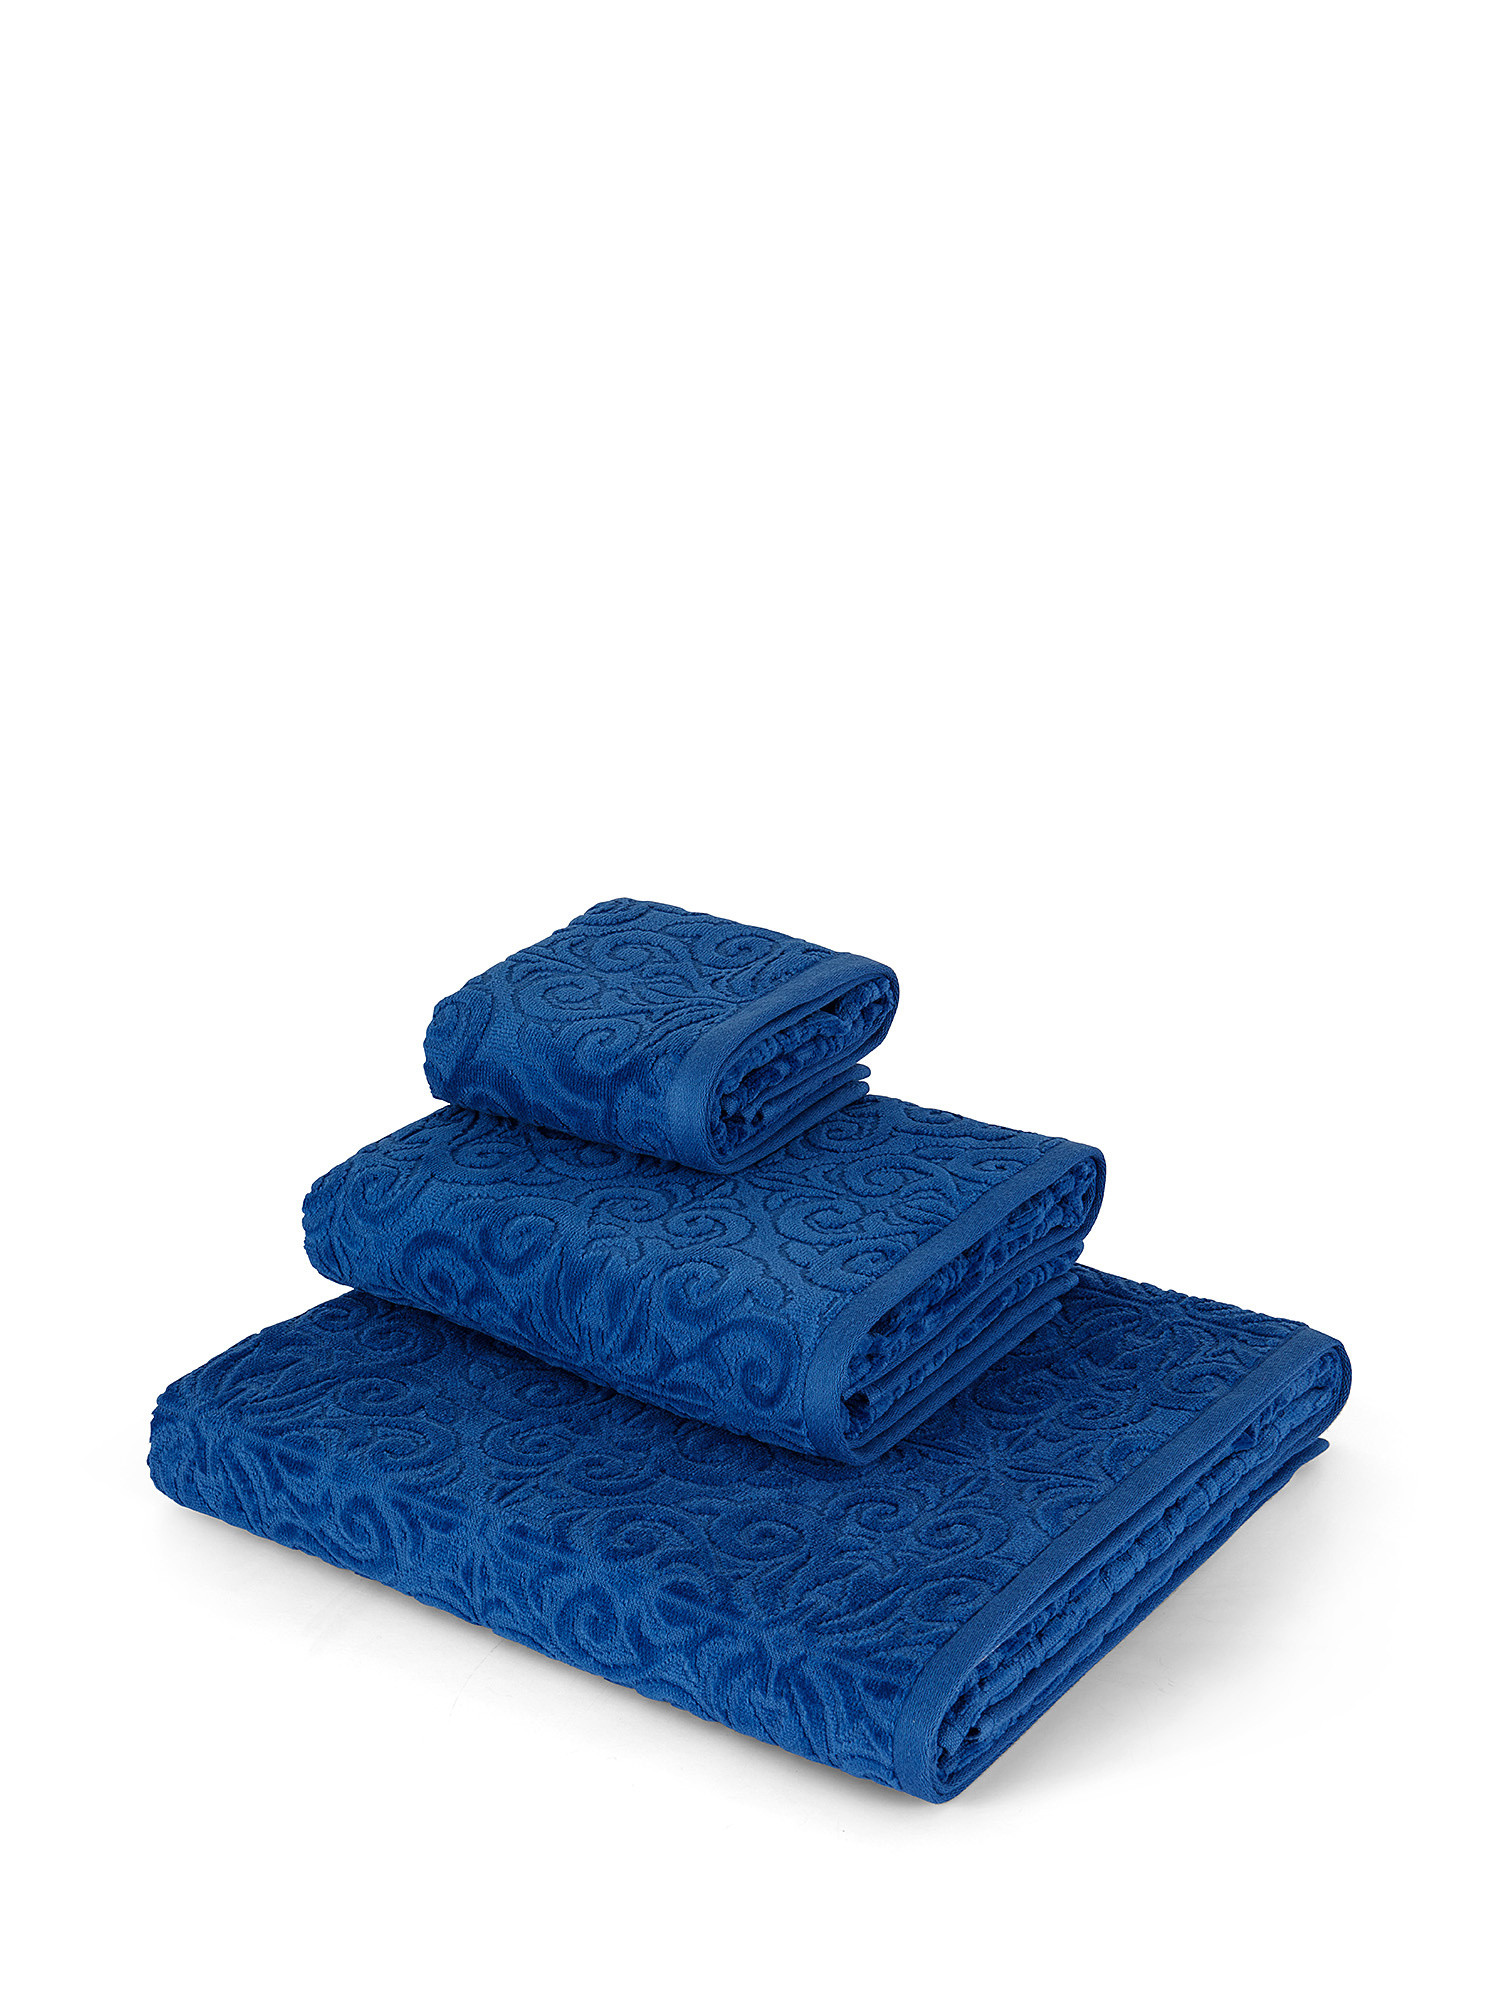 Cotton velor towel with azulejos motif, Blue, large image number 0